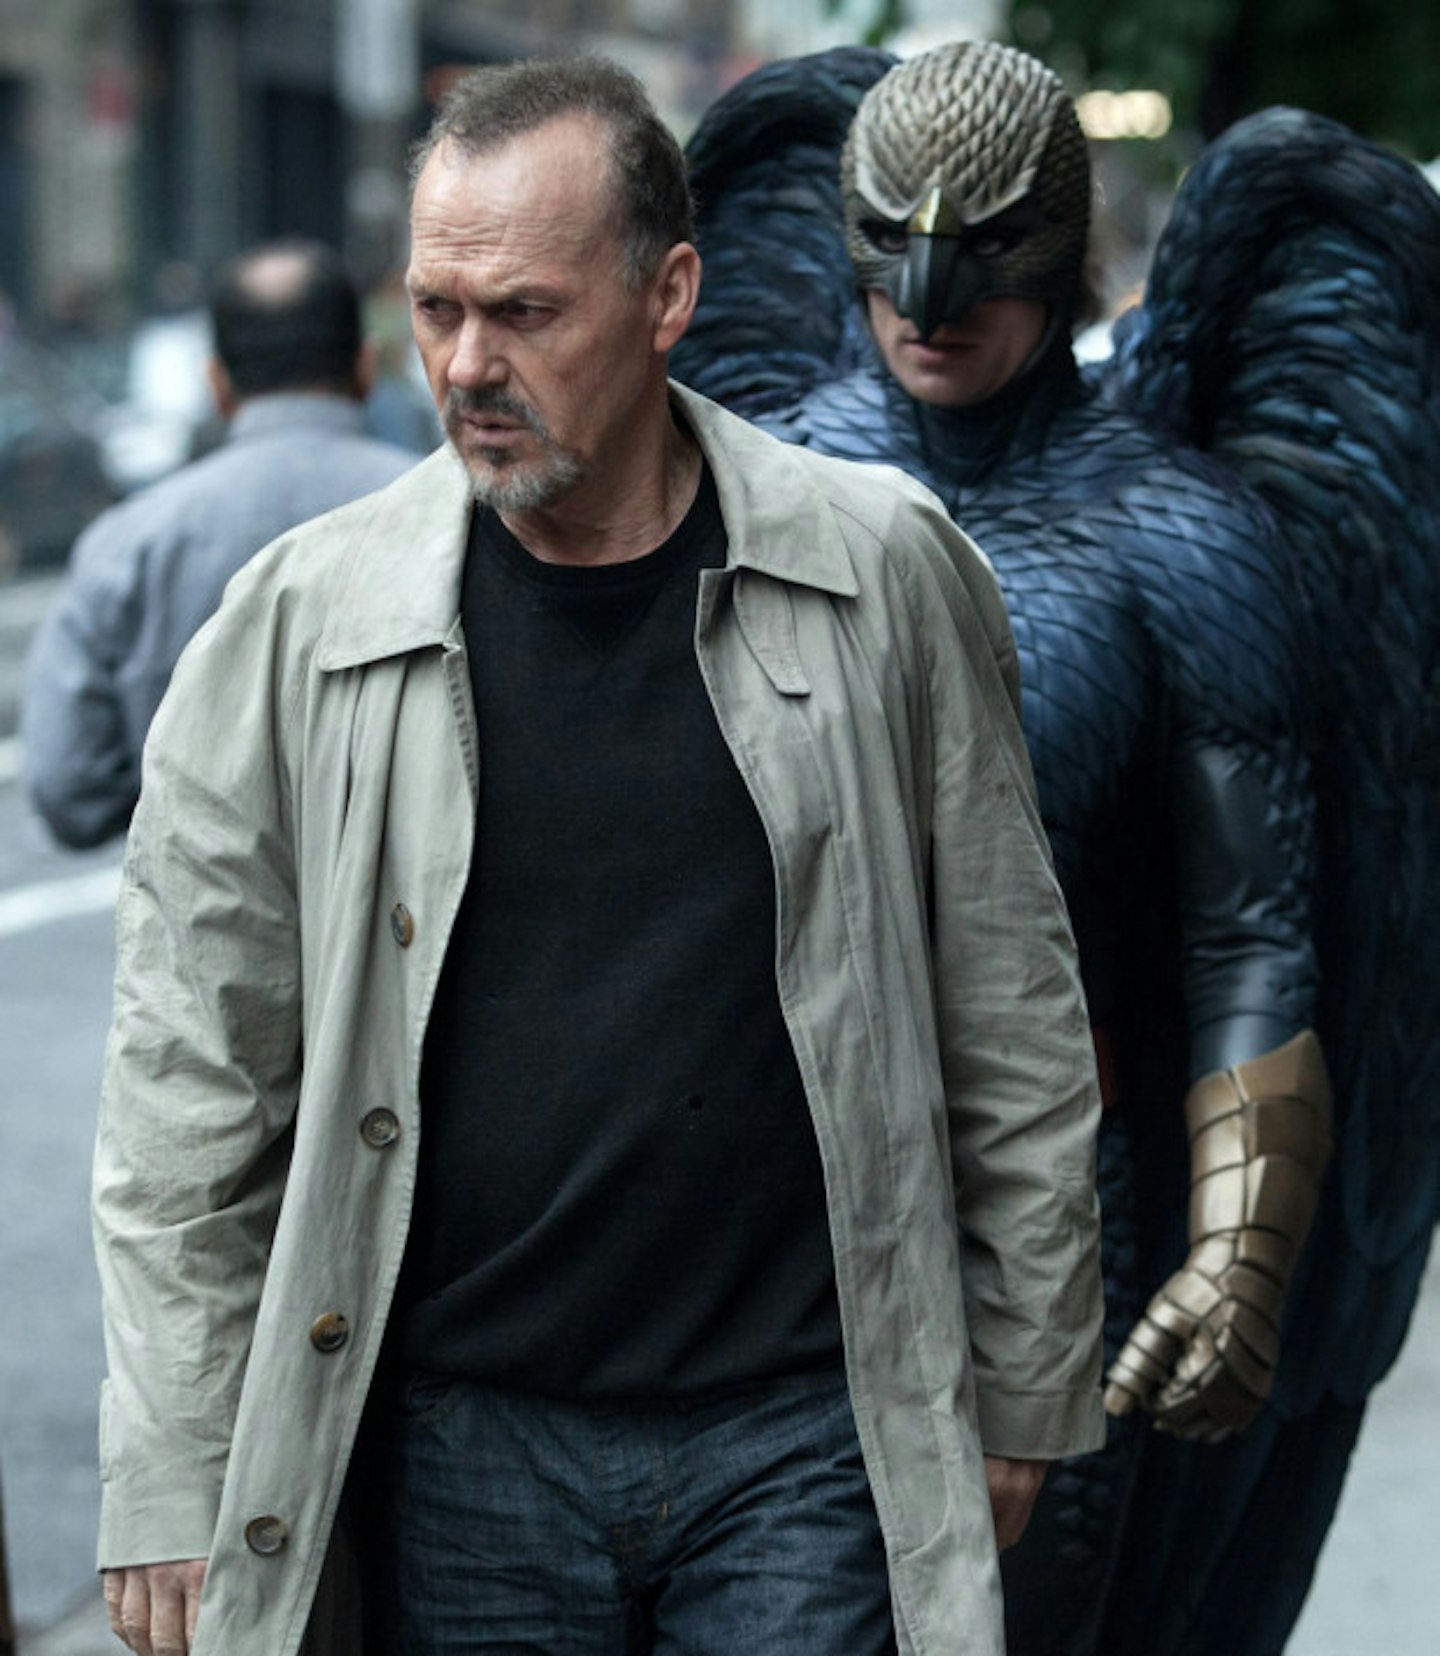 Best Cinematography winner: Emmanuel Lubezki for Birdman!